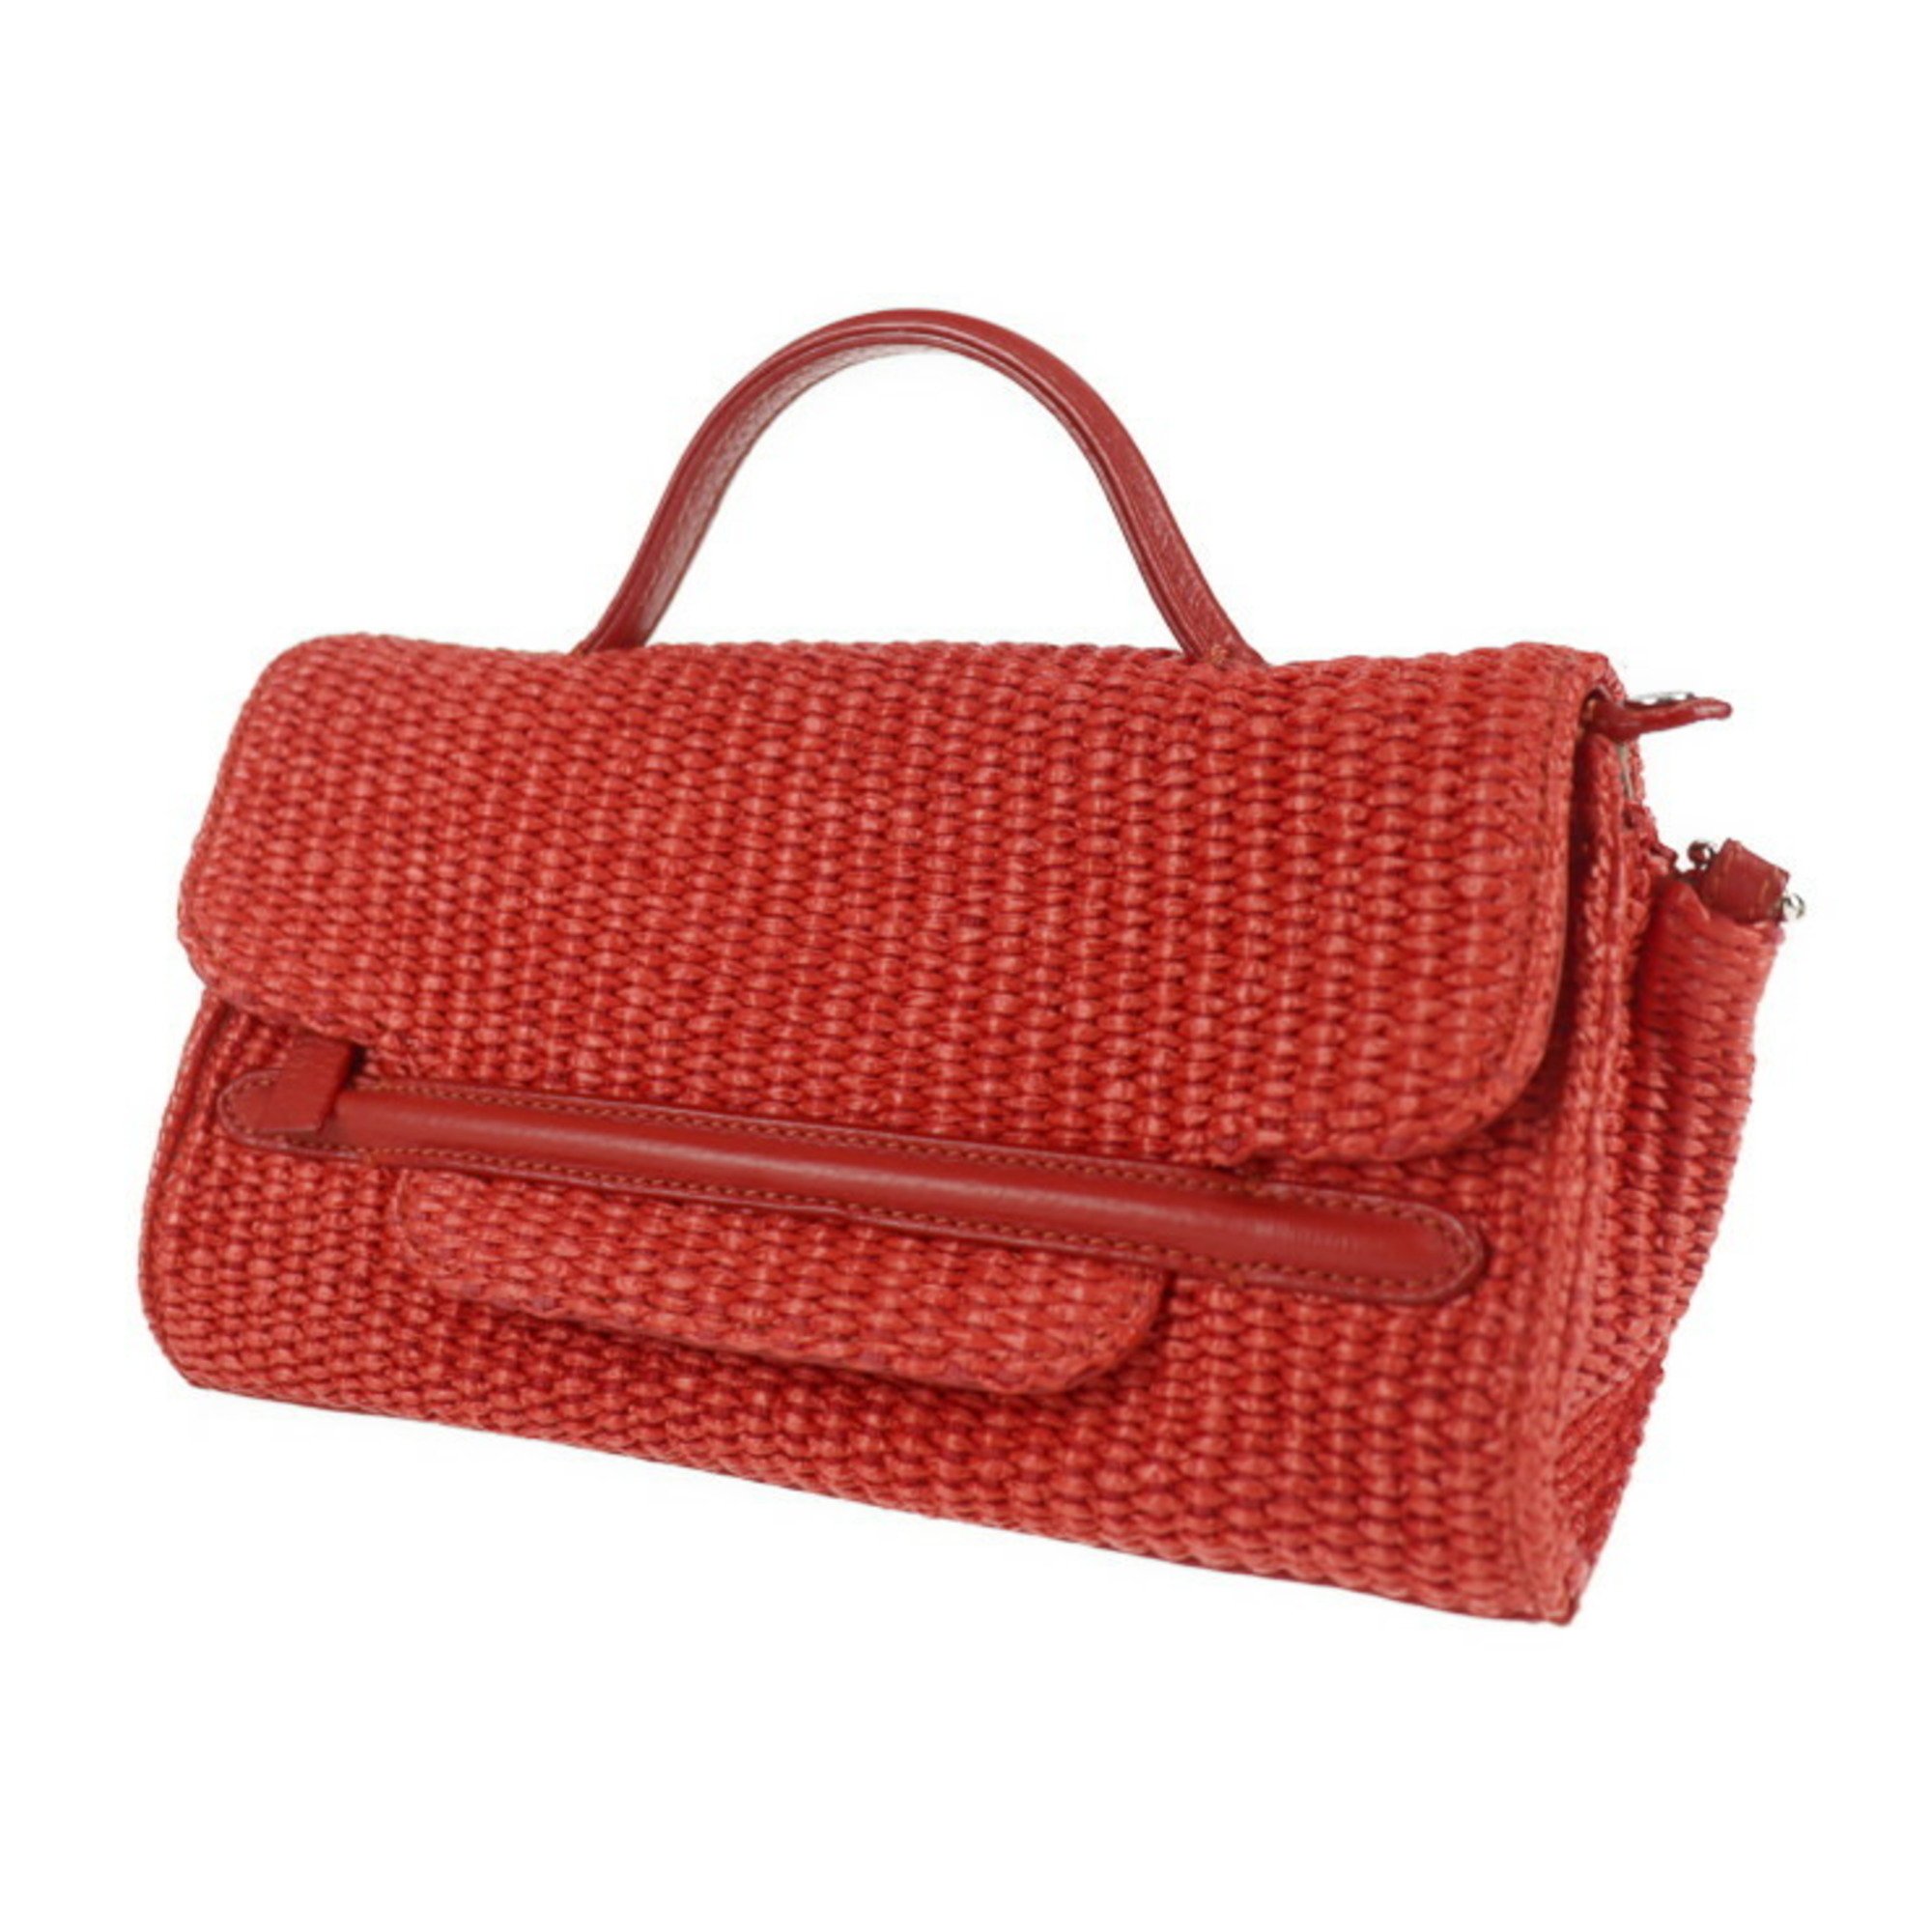 ZANELLATO handbag straw leather red 2WAY shoulder bag